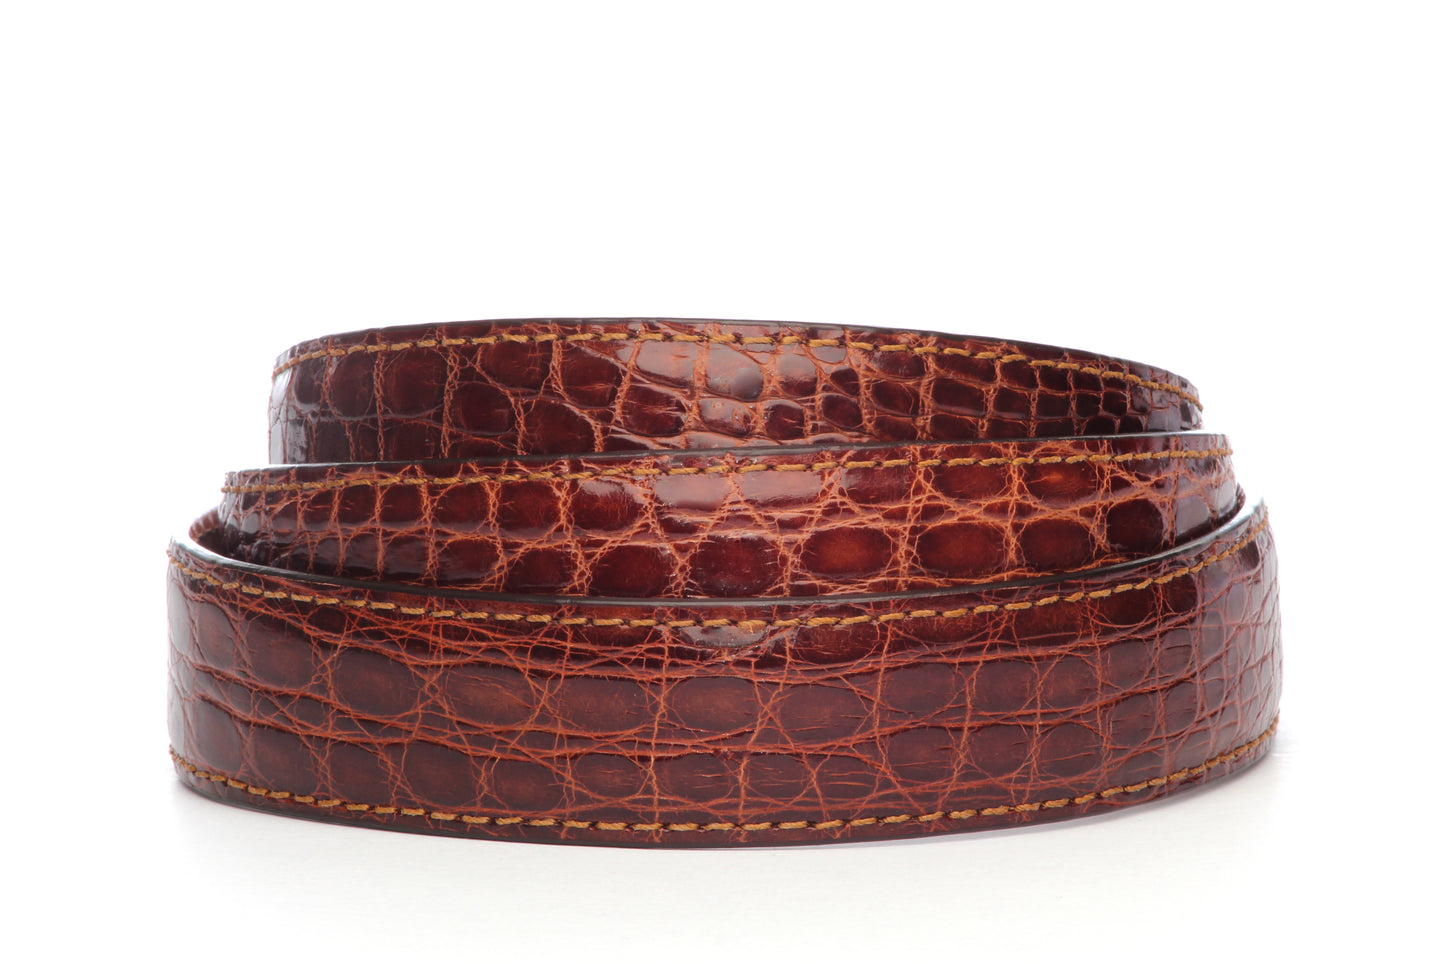 Men's crocodile belt strap in cognac with a 1.25-inch width, formal look